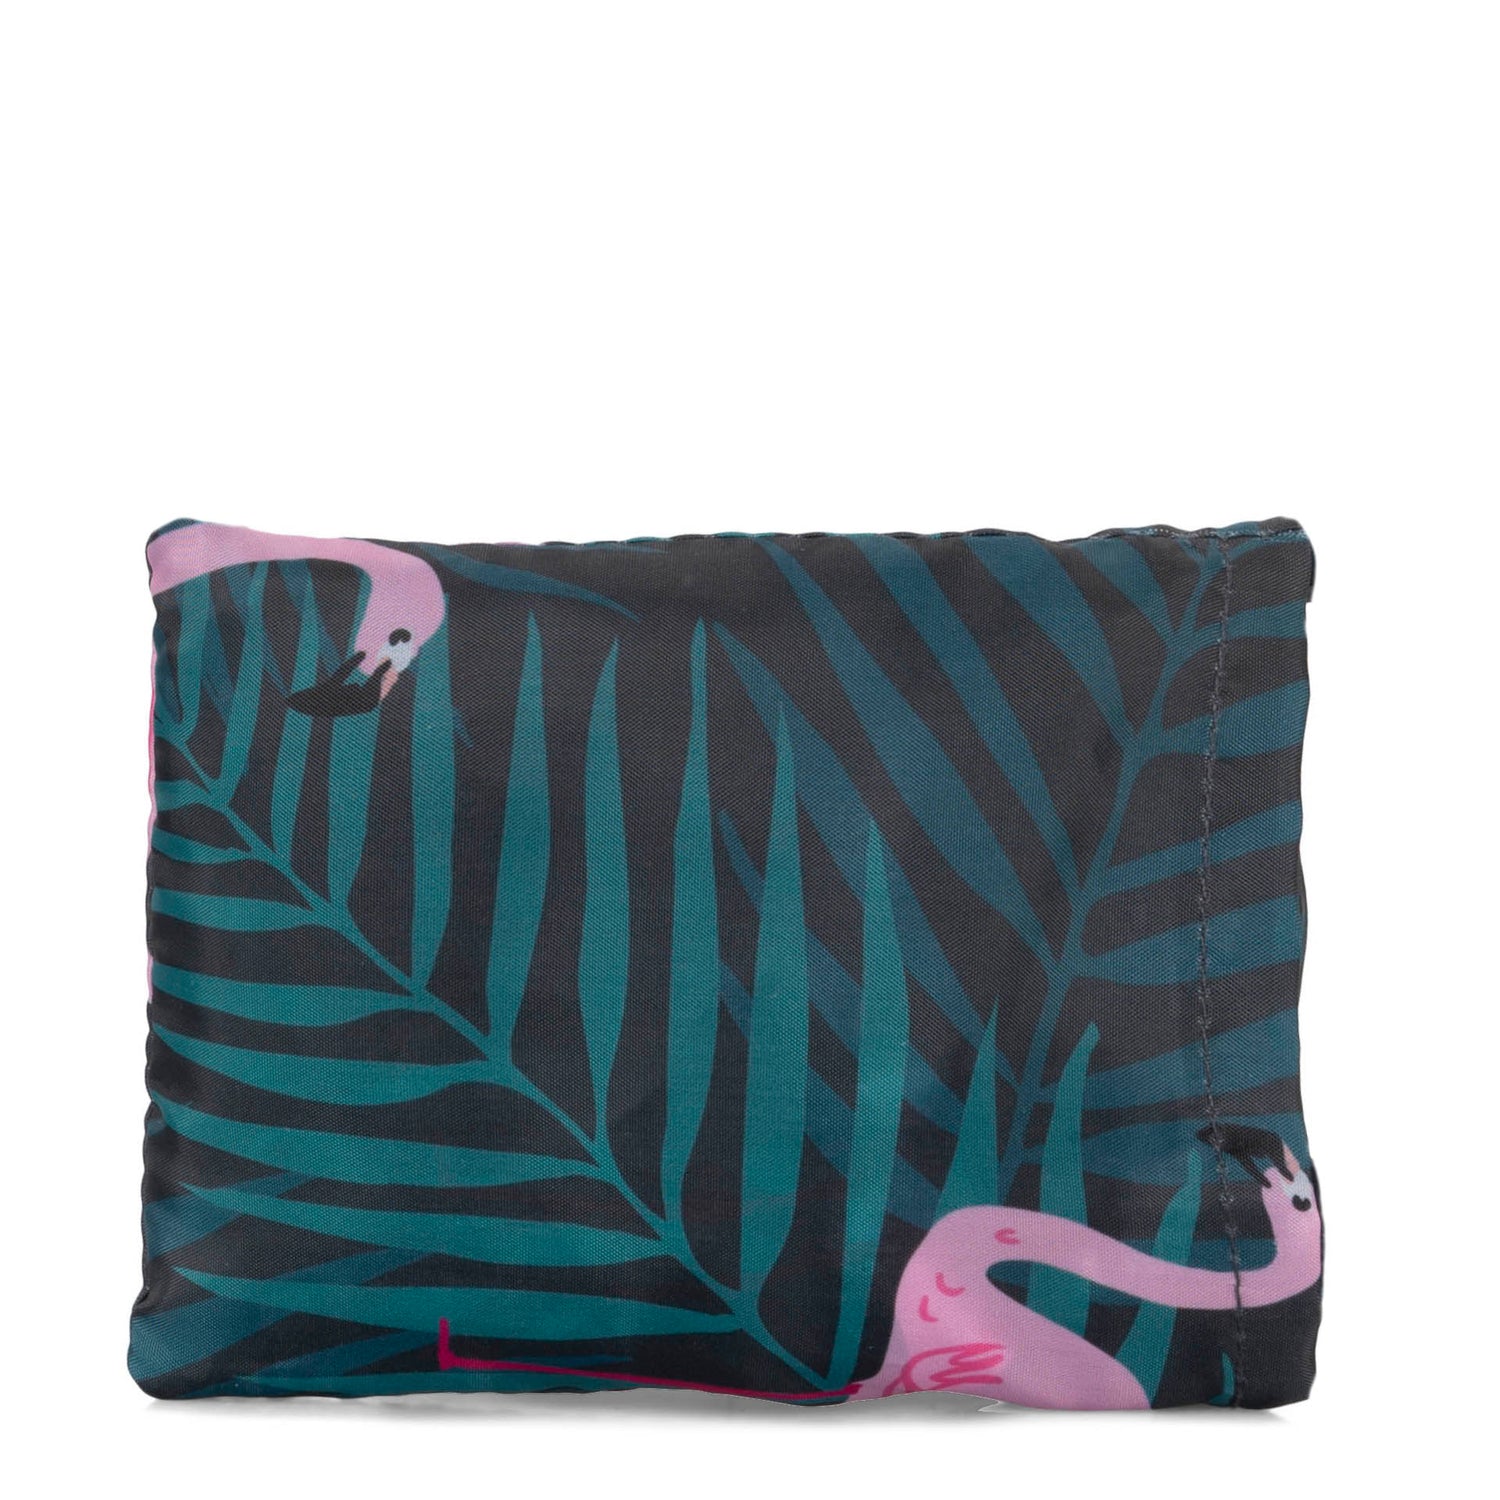 Flamingo Reusable Bag